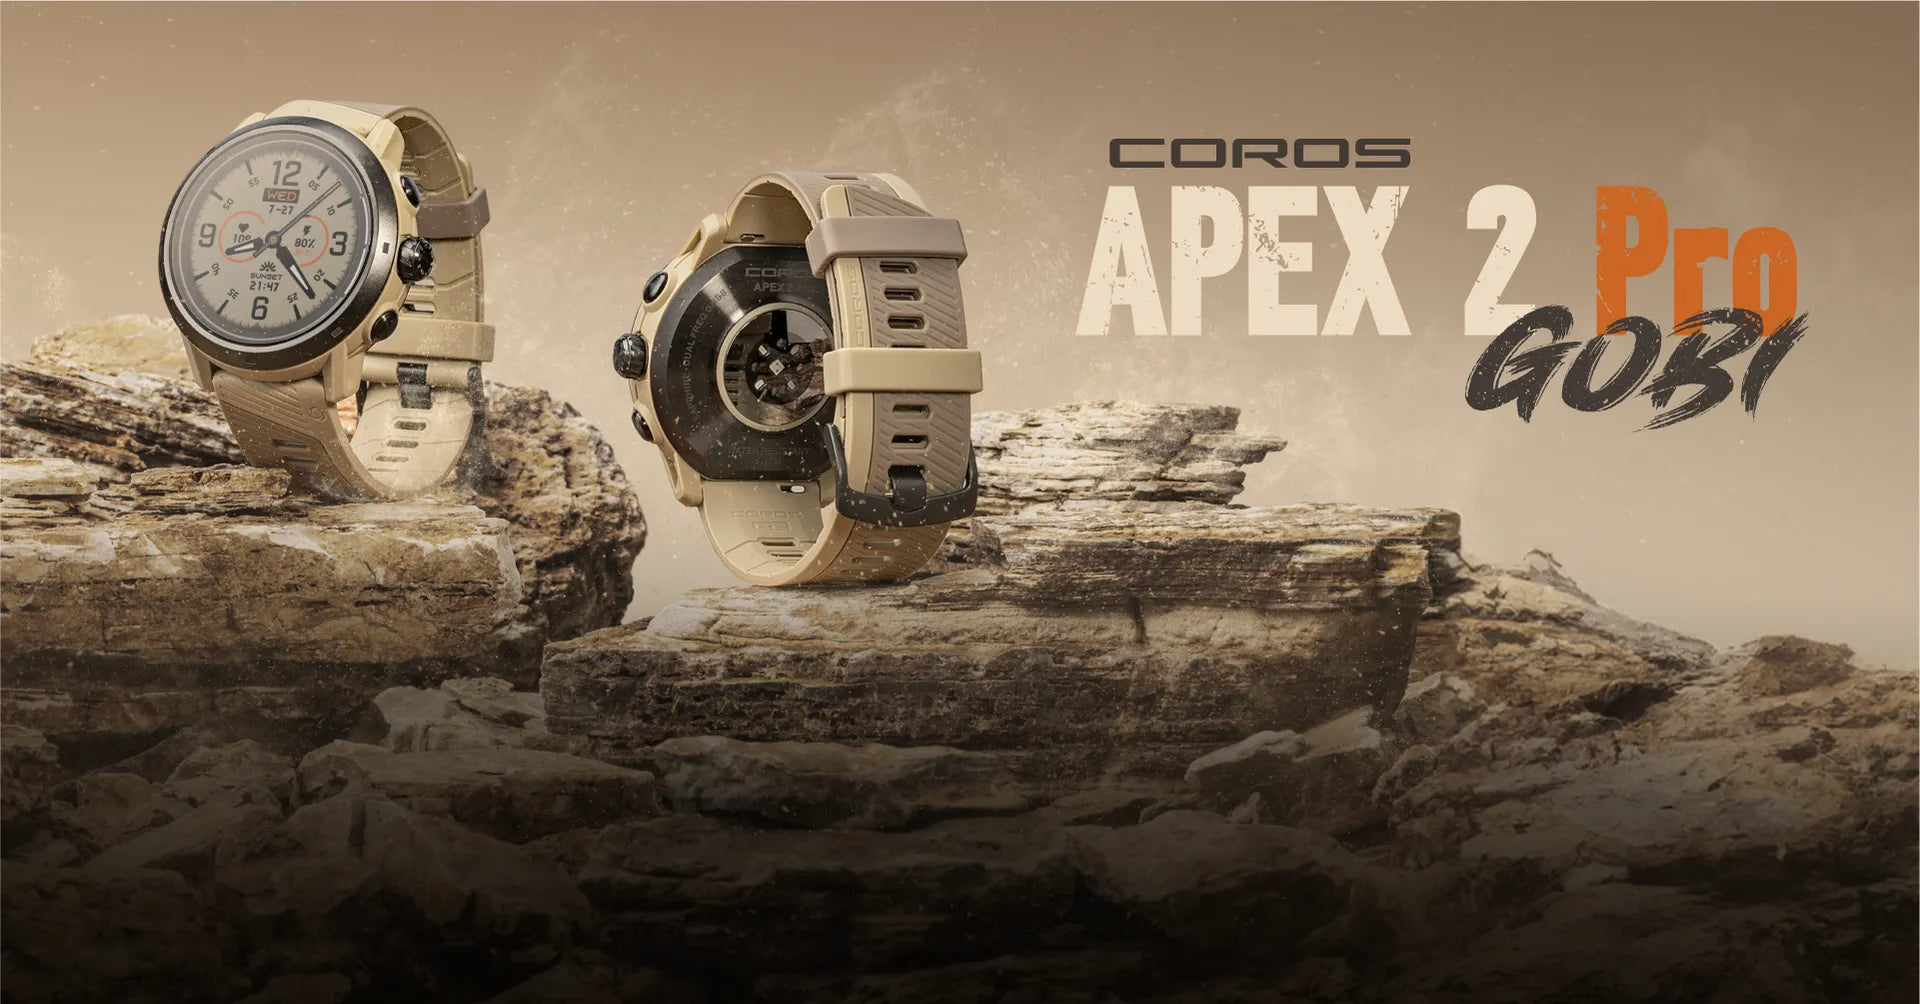 Nyhet: COROS APEX 2 Pro Gobi - Limited Edition